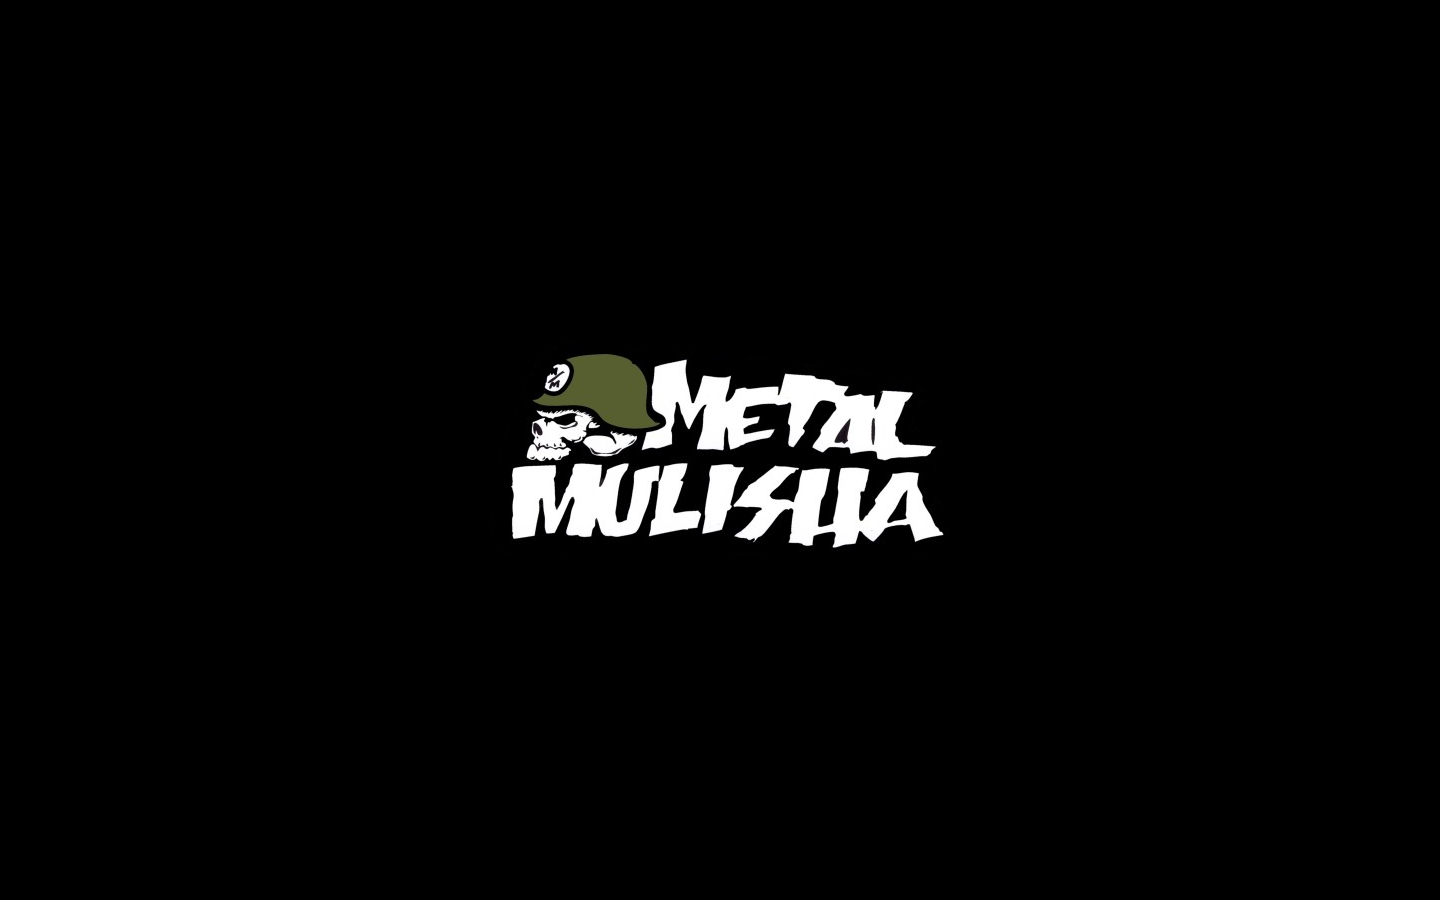 metal mulisha logo wallpaper #5